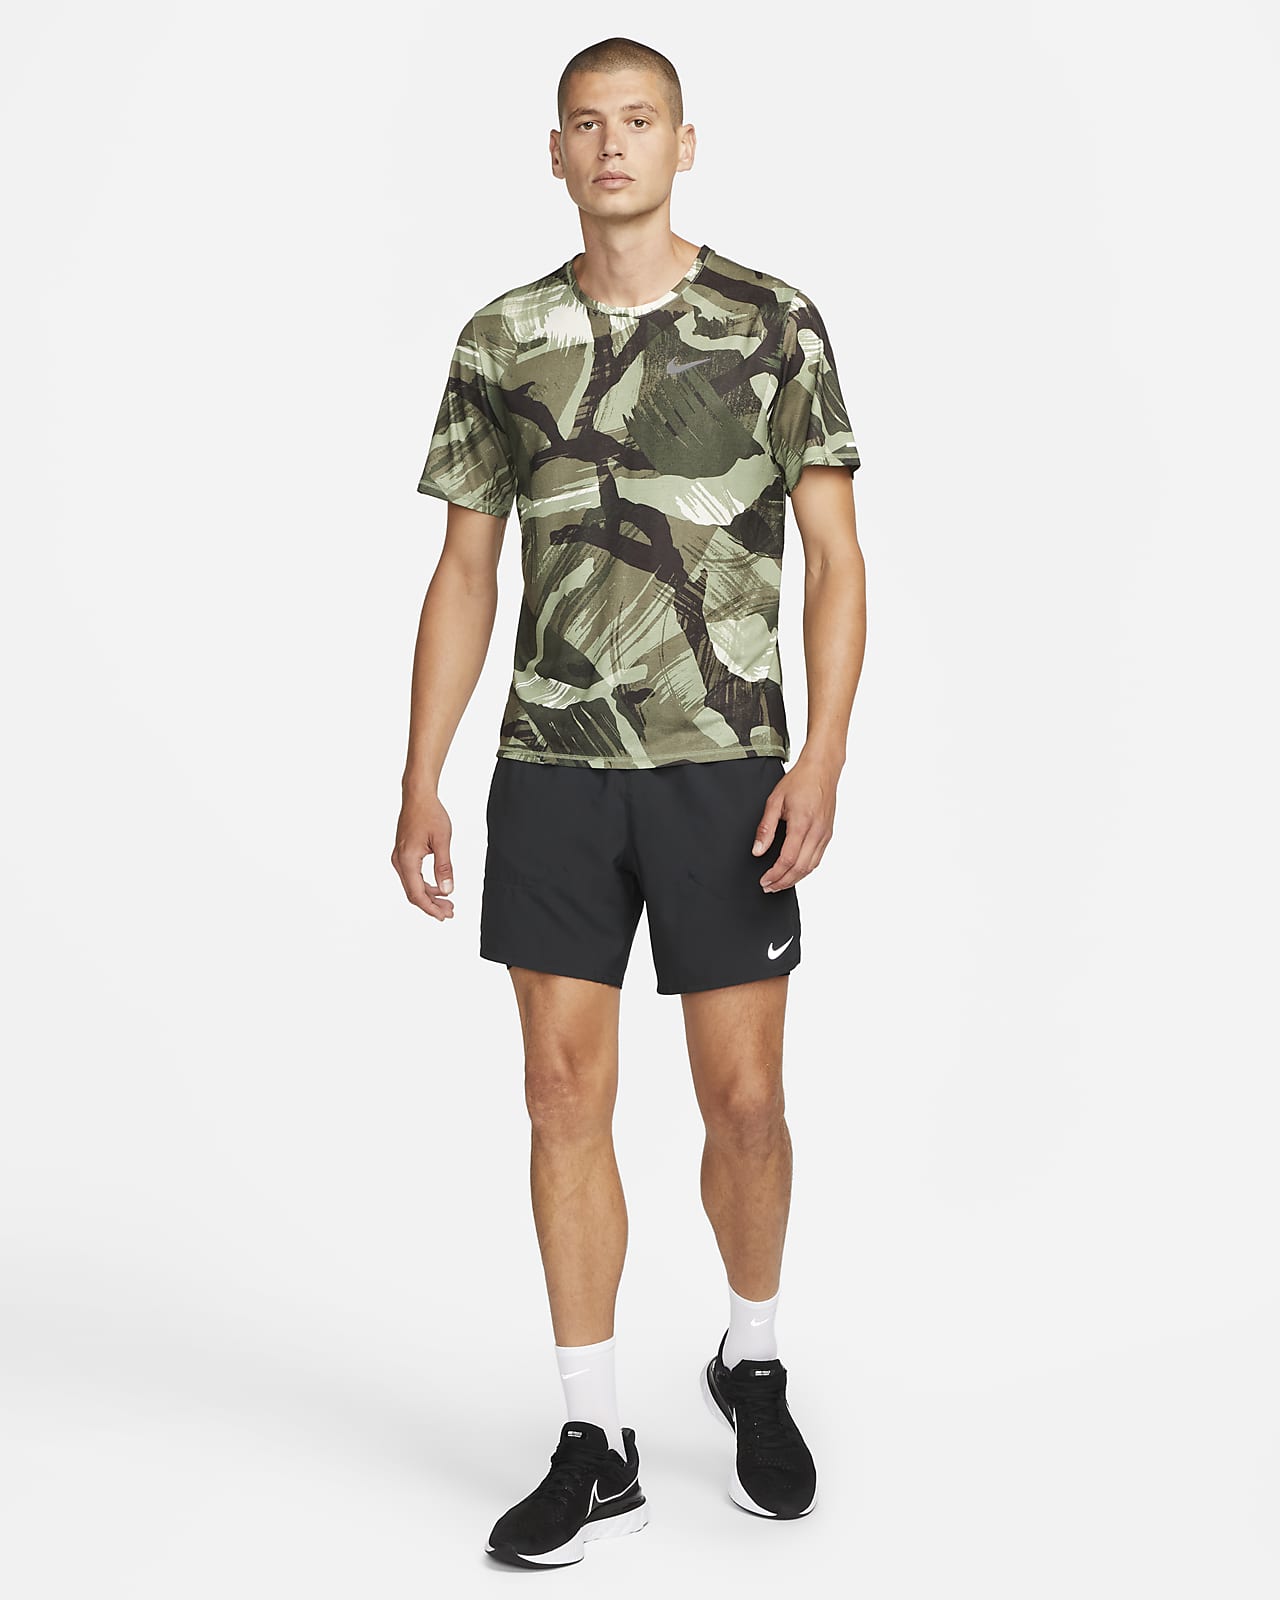 Nike Dri-FIT Miler Men's Short-Sleeve Camo Running Top. Nike